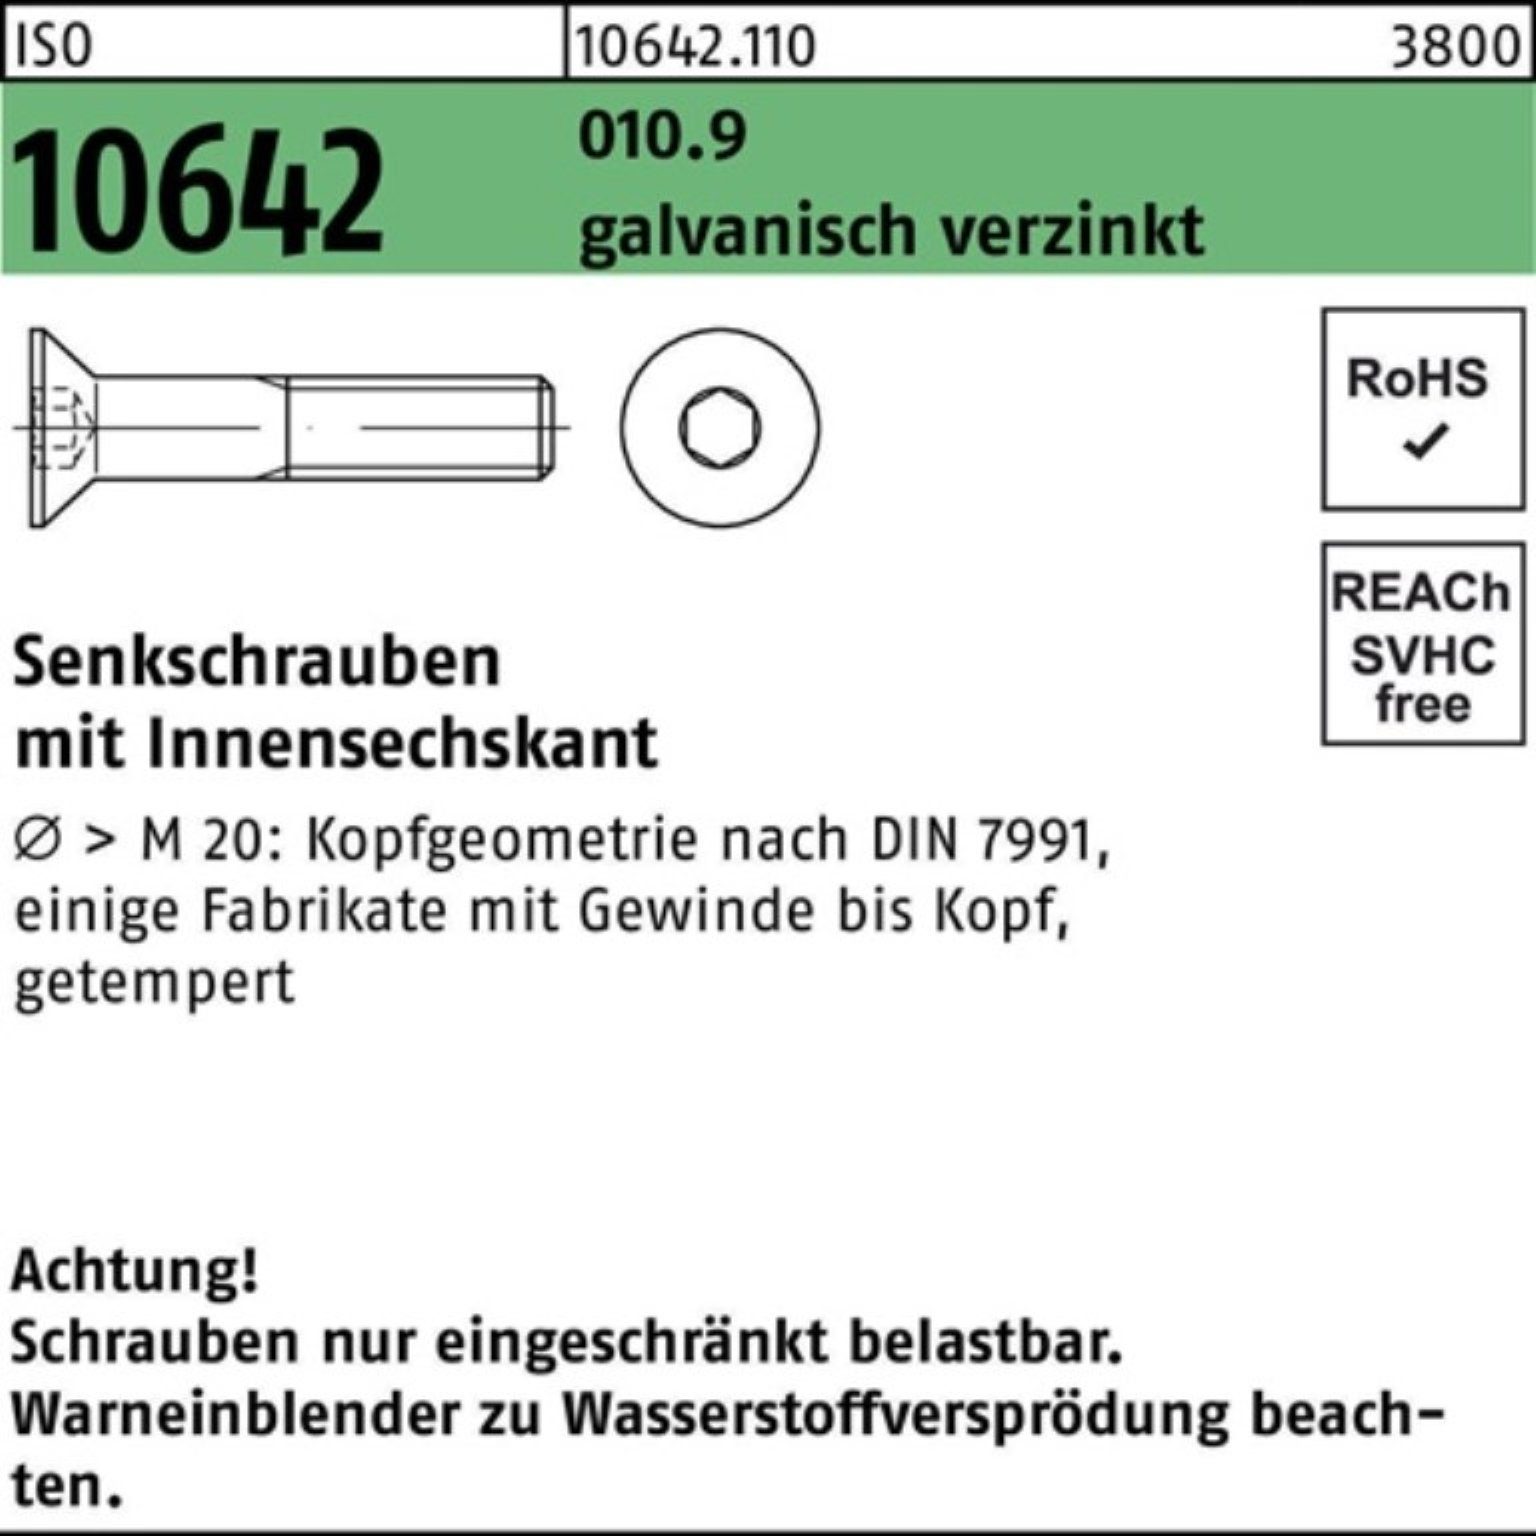 M6x Reyher 80 galv.verz. Innen-6kt 10642 ISO 20 Pack Senkschraube Senkschraube 200er 010.9